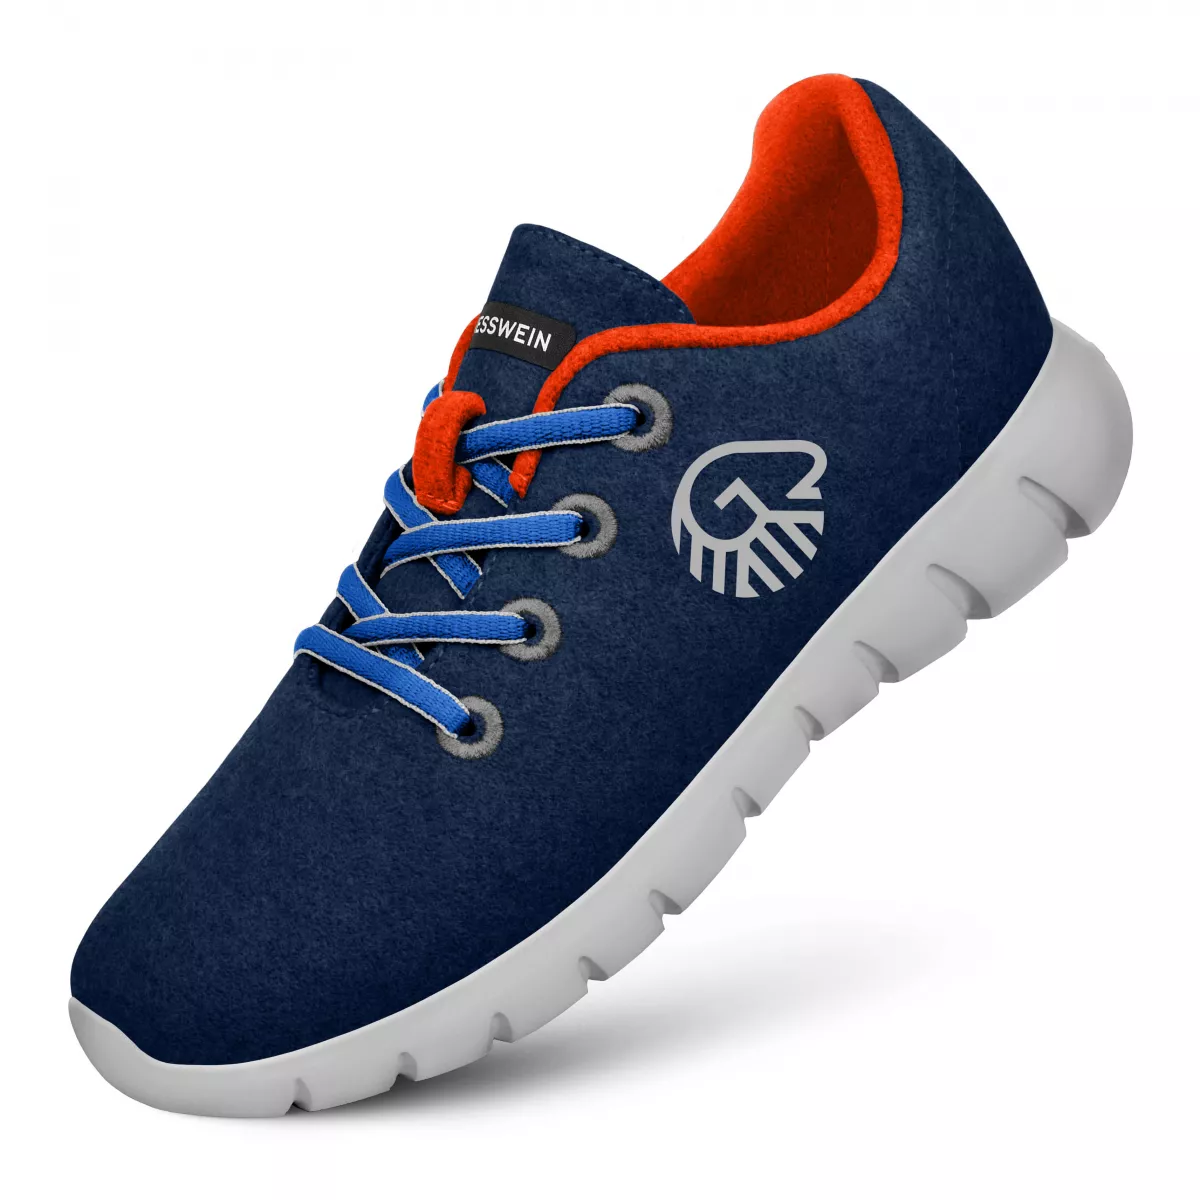 Pantofi barbati Merino Runners bleumarin 640 40